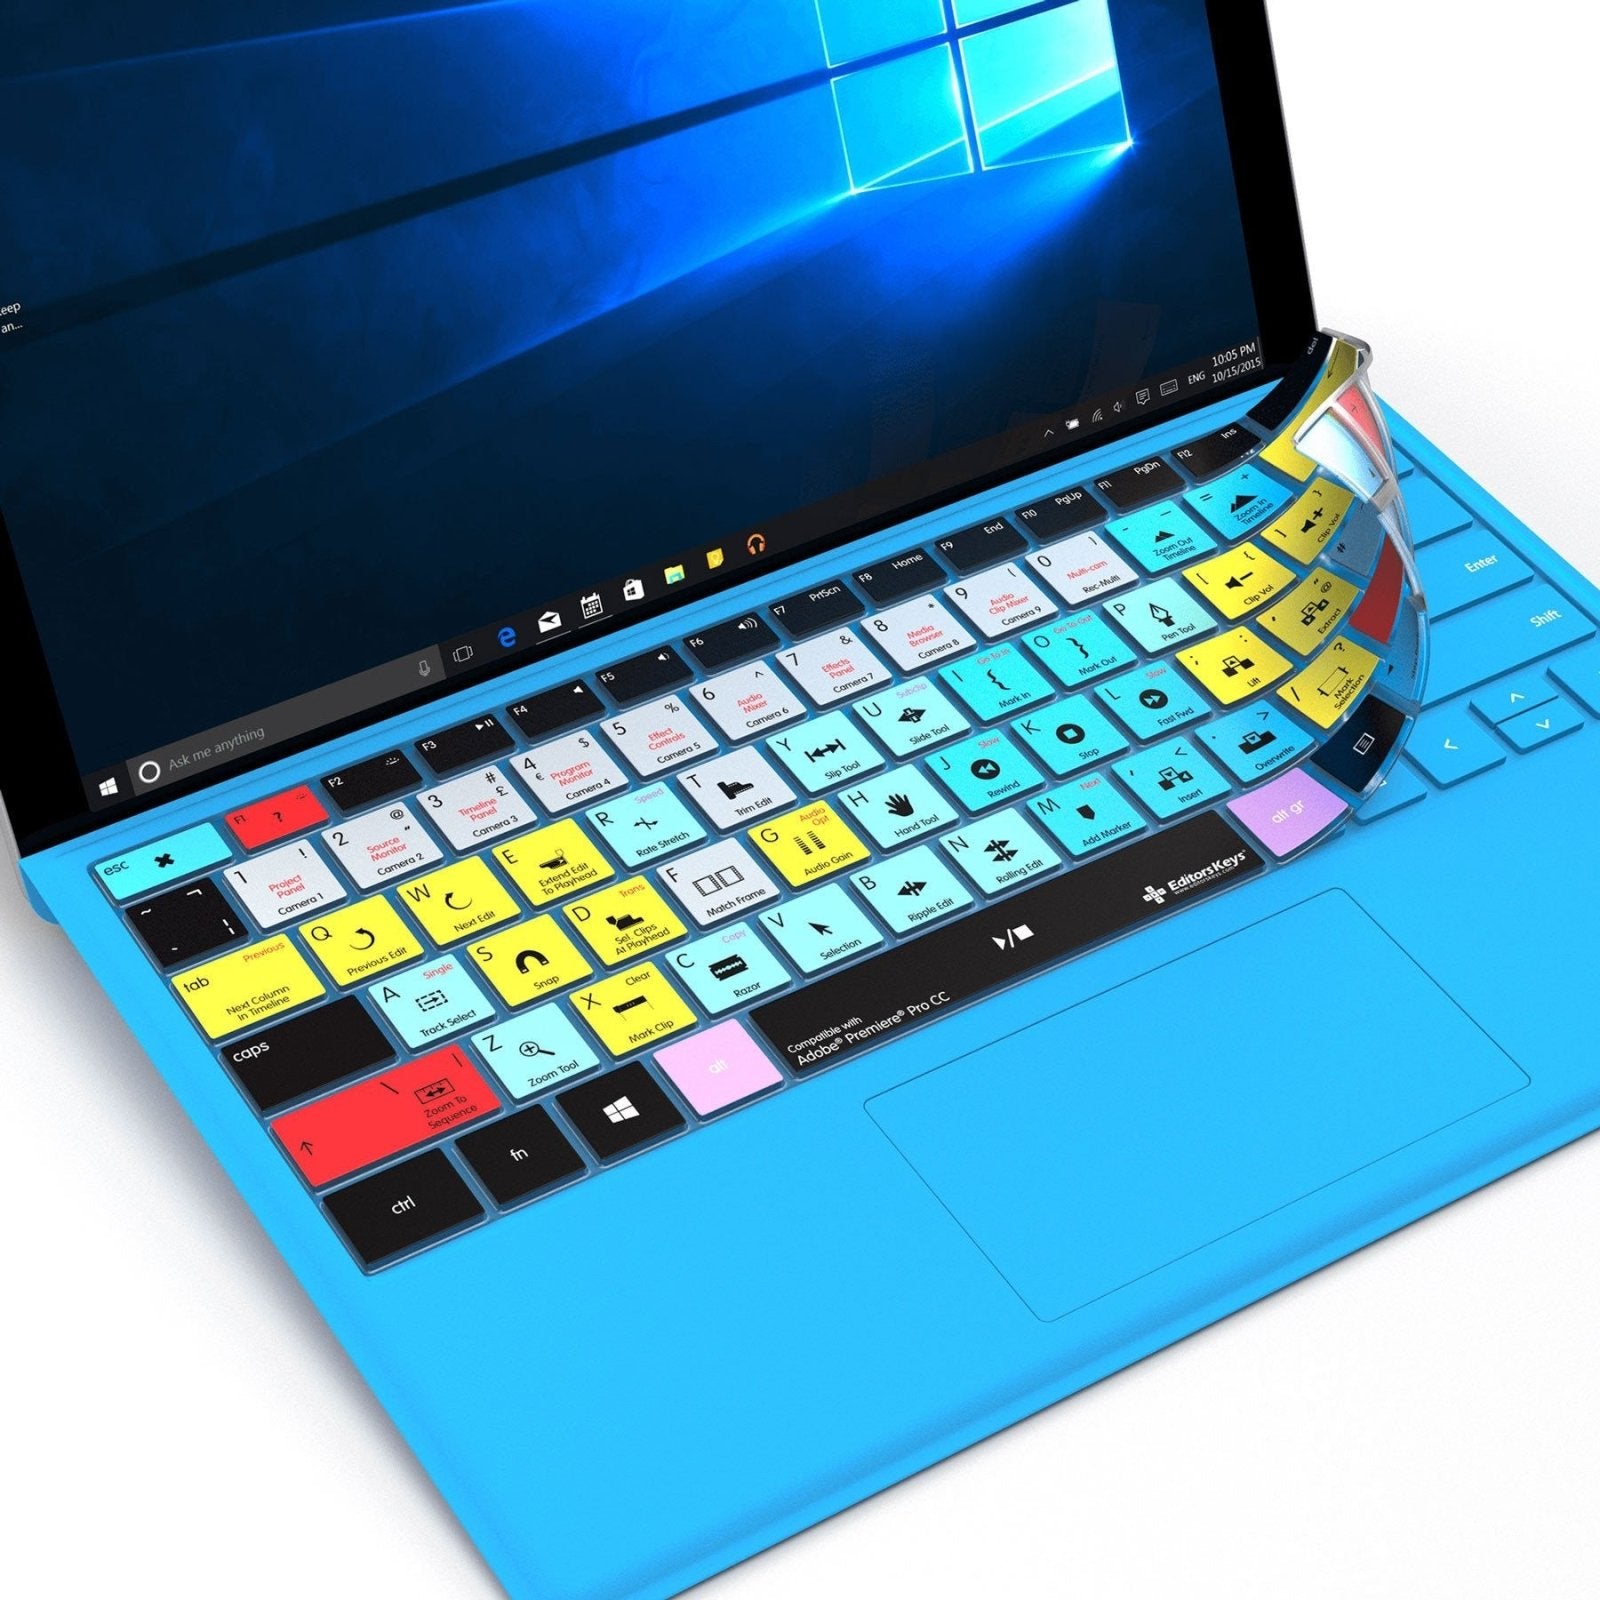 Adobe Premiere Pro Keyboard Covers for Microsoft Surface Line - Editors Keys